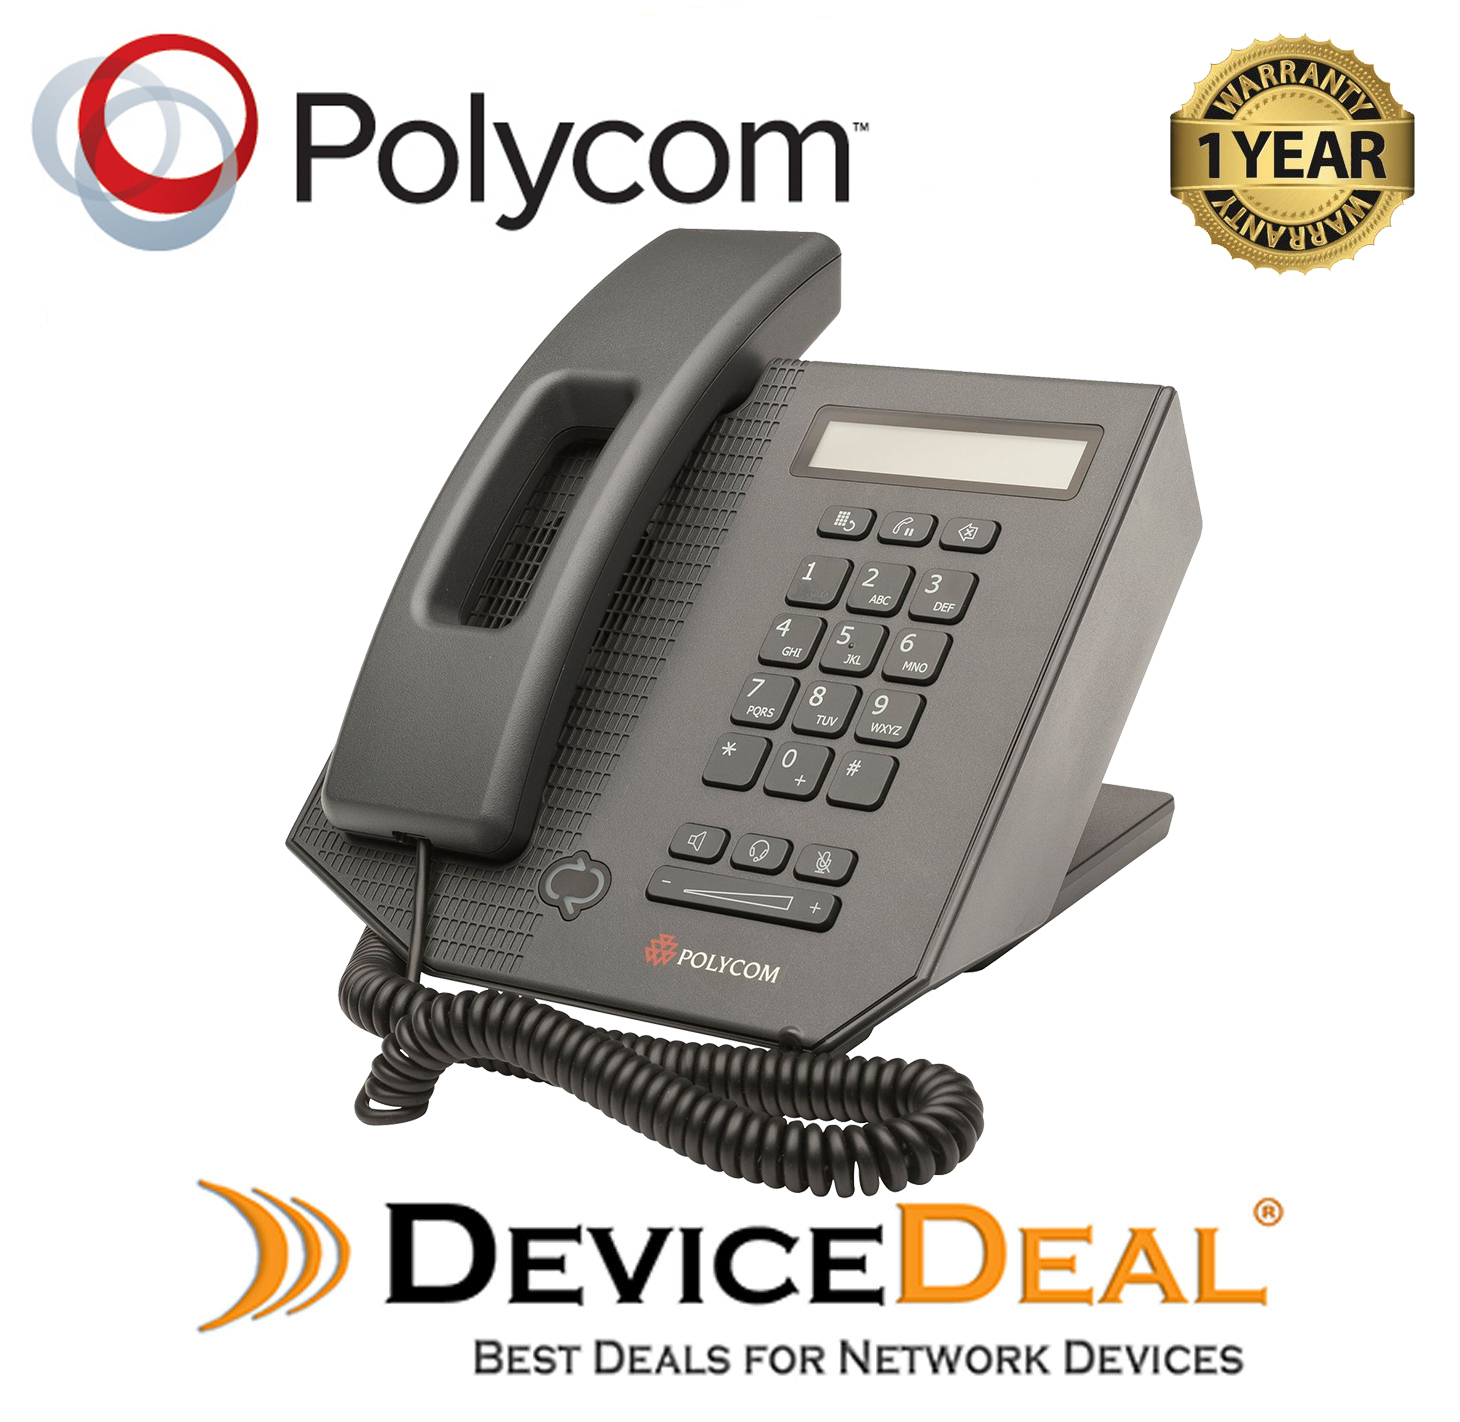 Polycom Cx300 R2 Usb Desktop Phone For Skype And Microsoft Lync